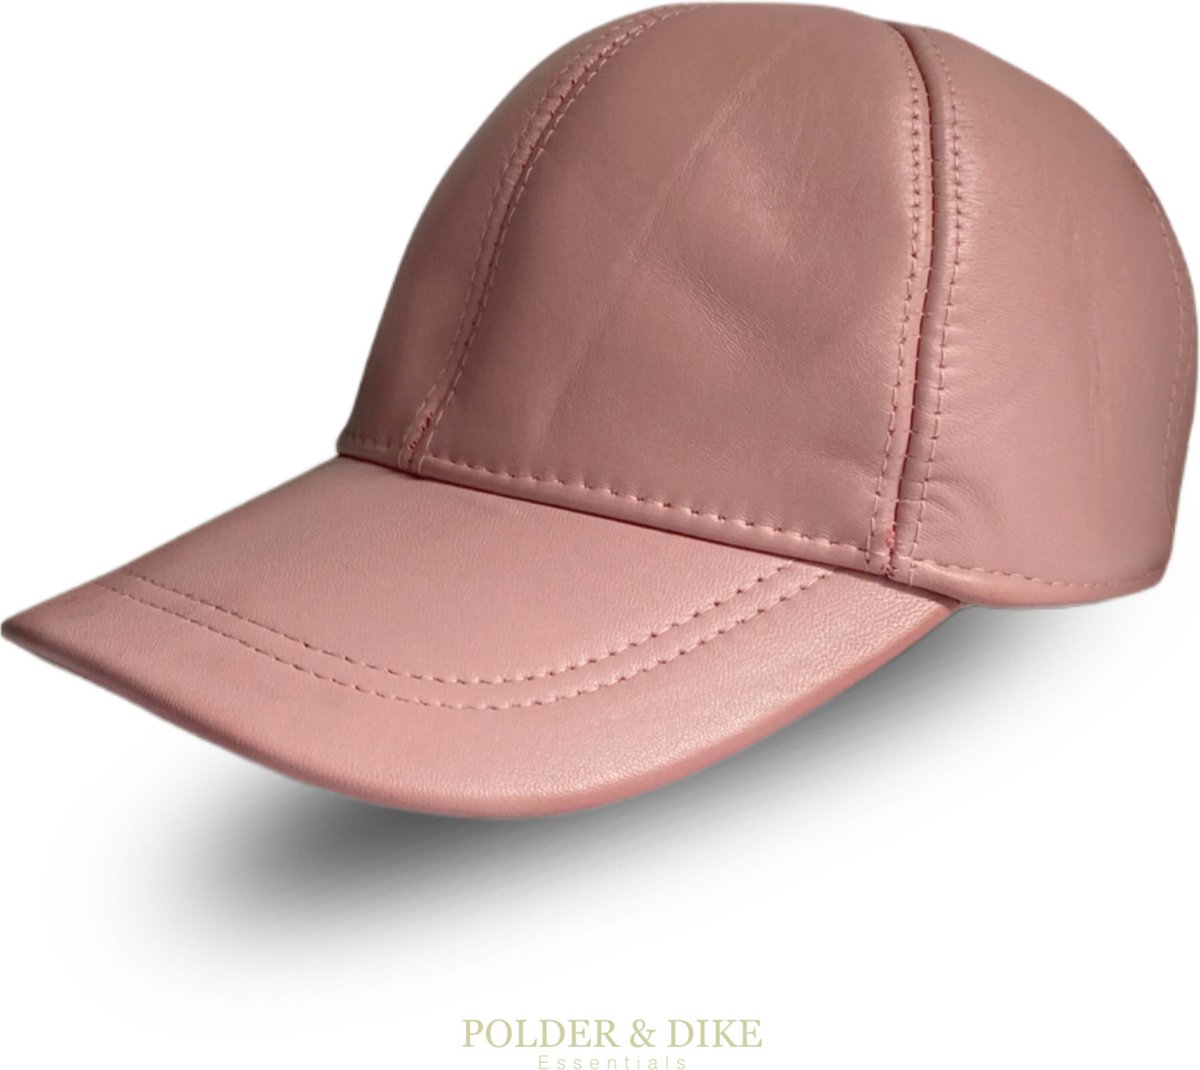 POLDER & DIKE - Cap - BaseBall Pet - The Yankee - roze - Vintage Pink - Echt leer